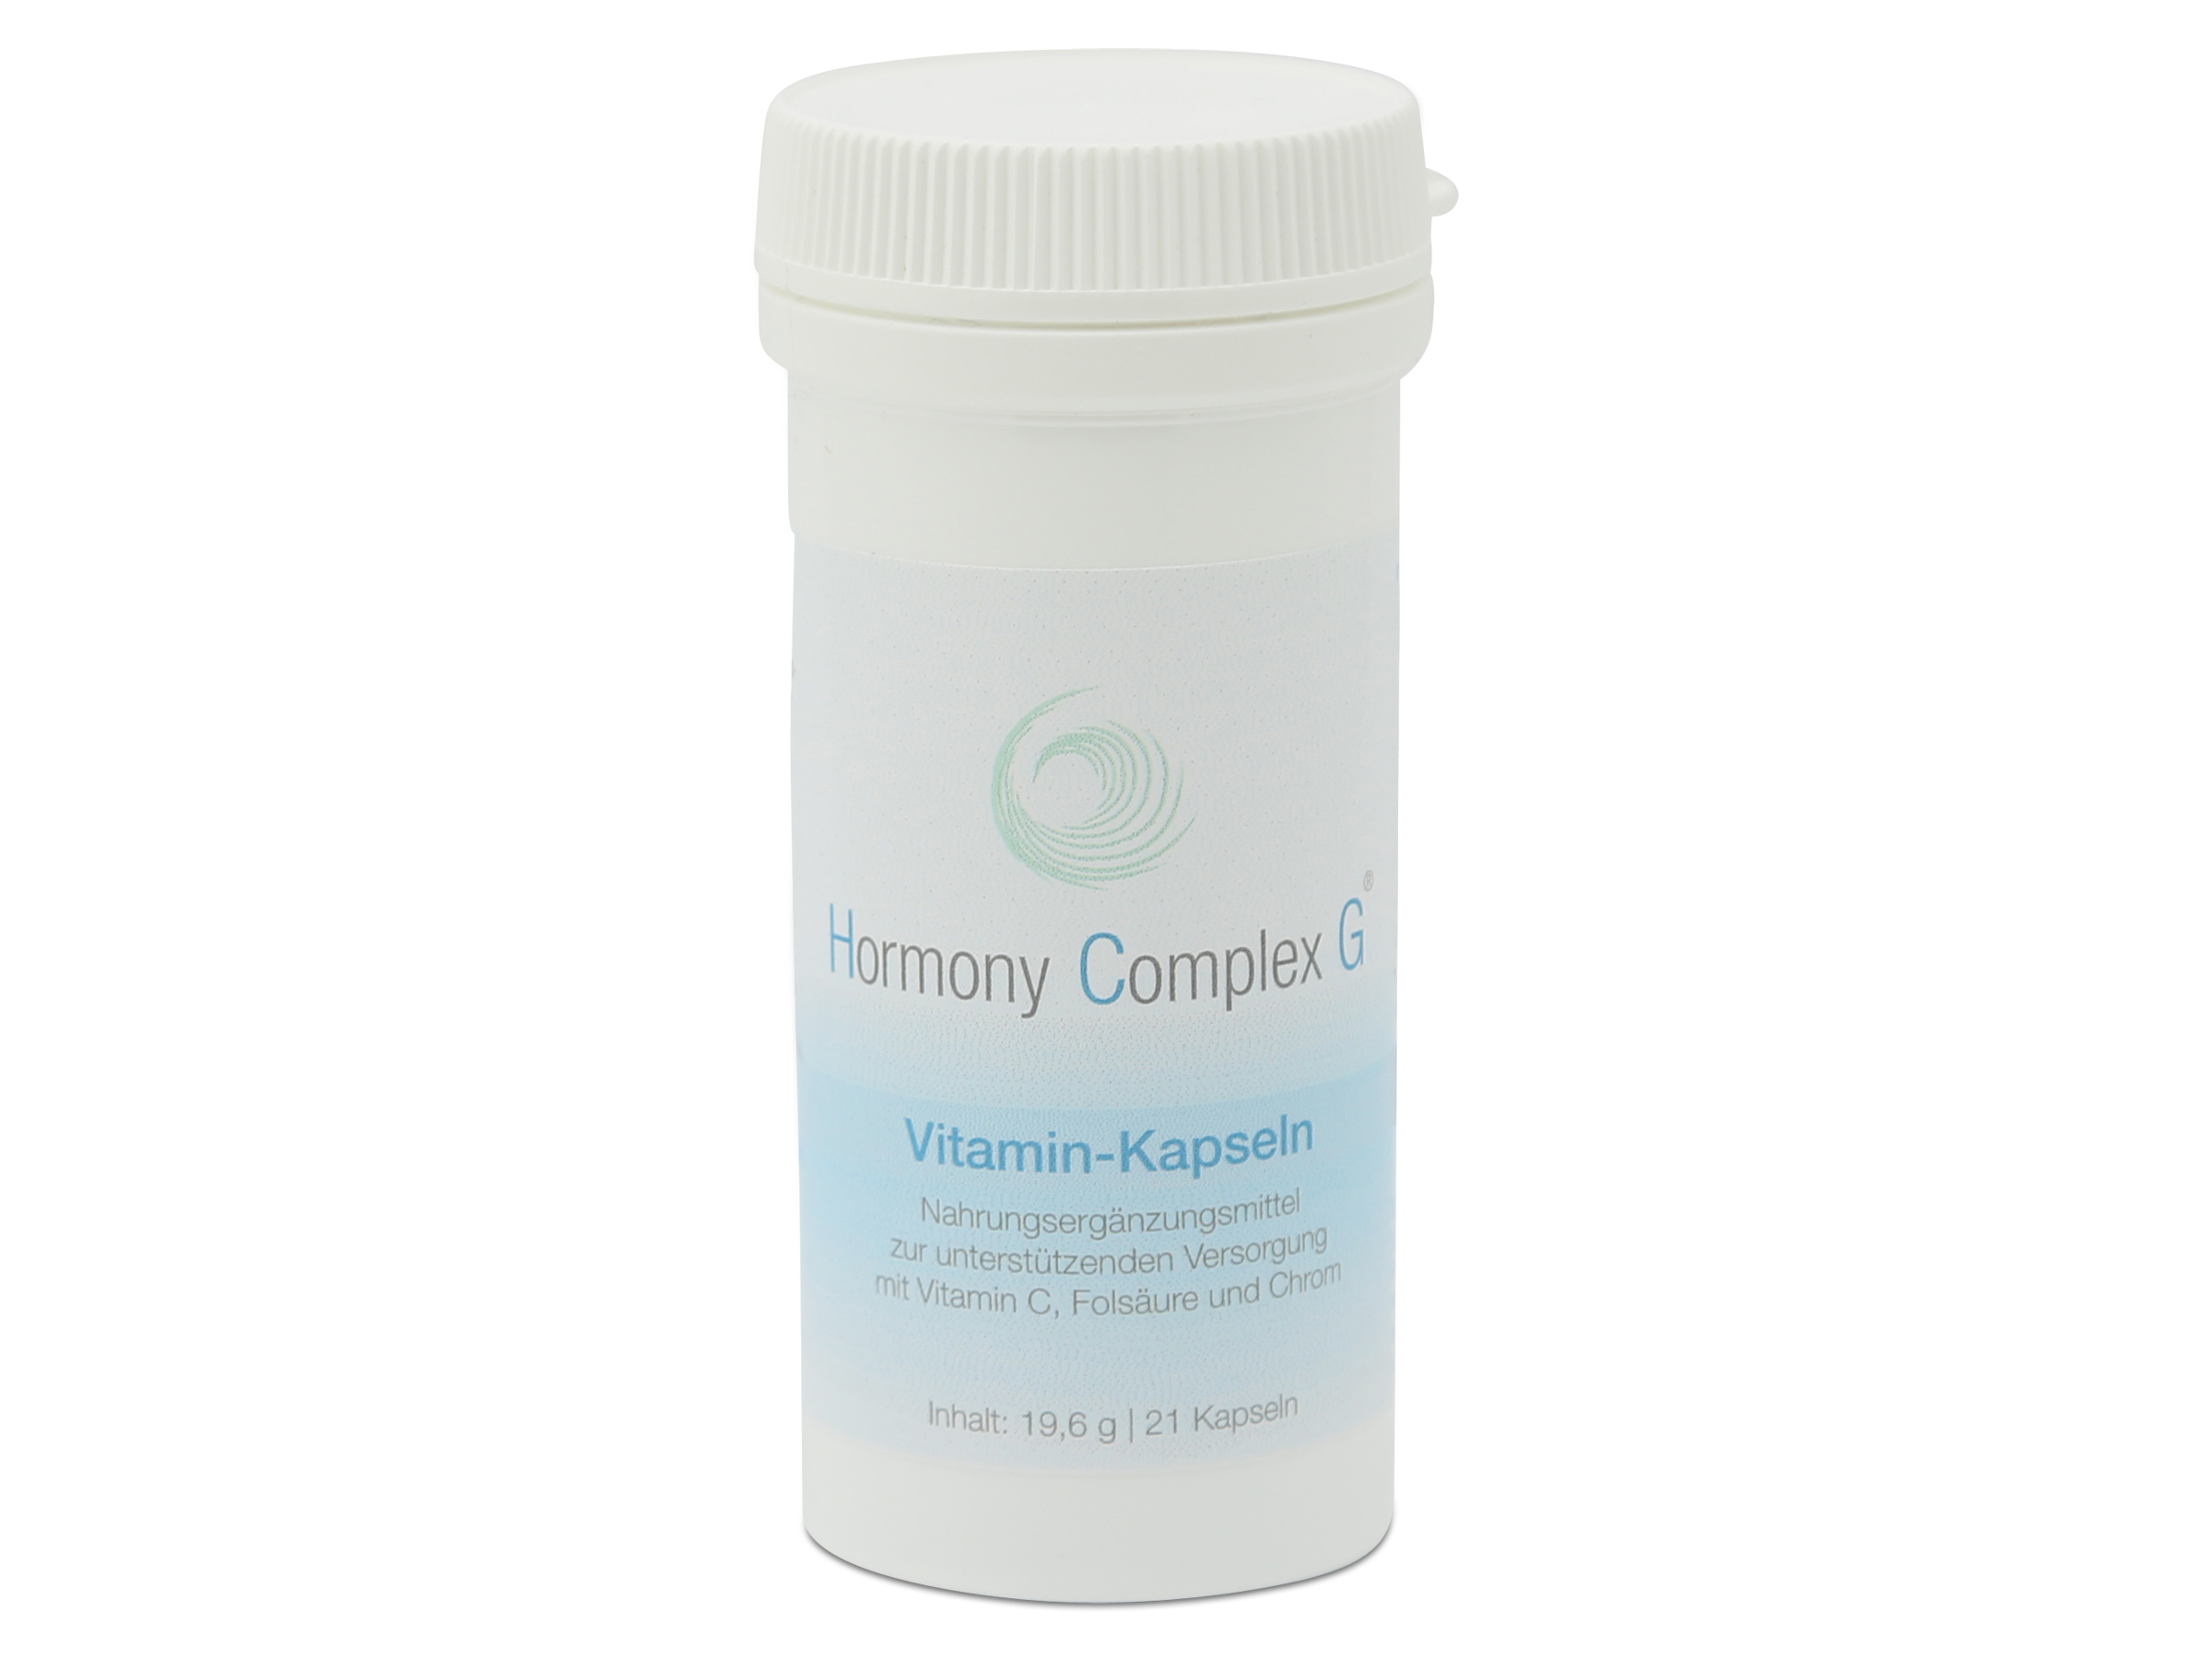 Hormony Complex G® Vitamin Kapseln | 21 Kapseln 19,6 g